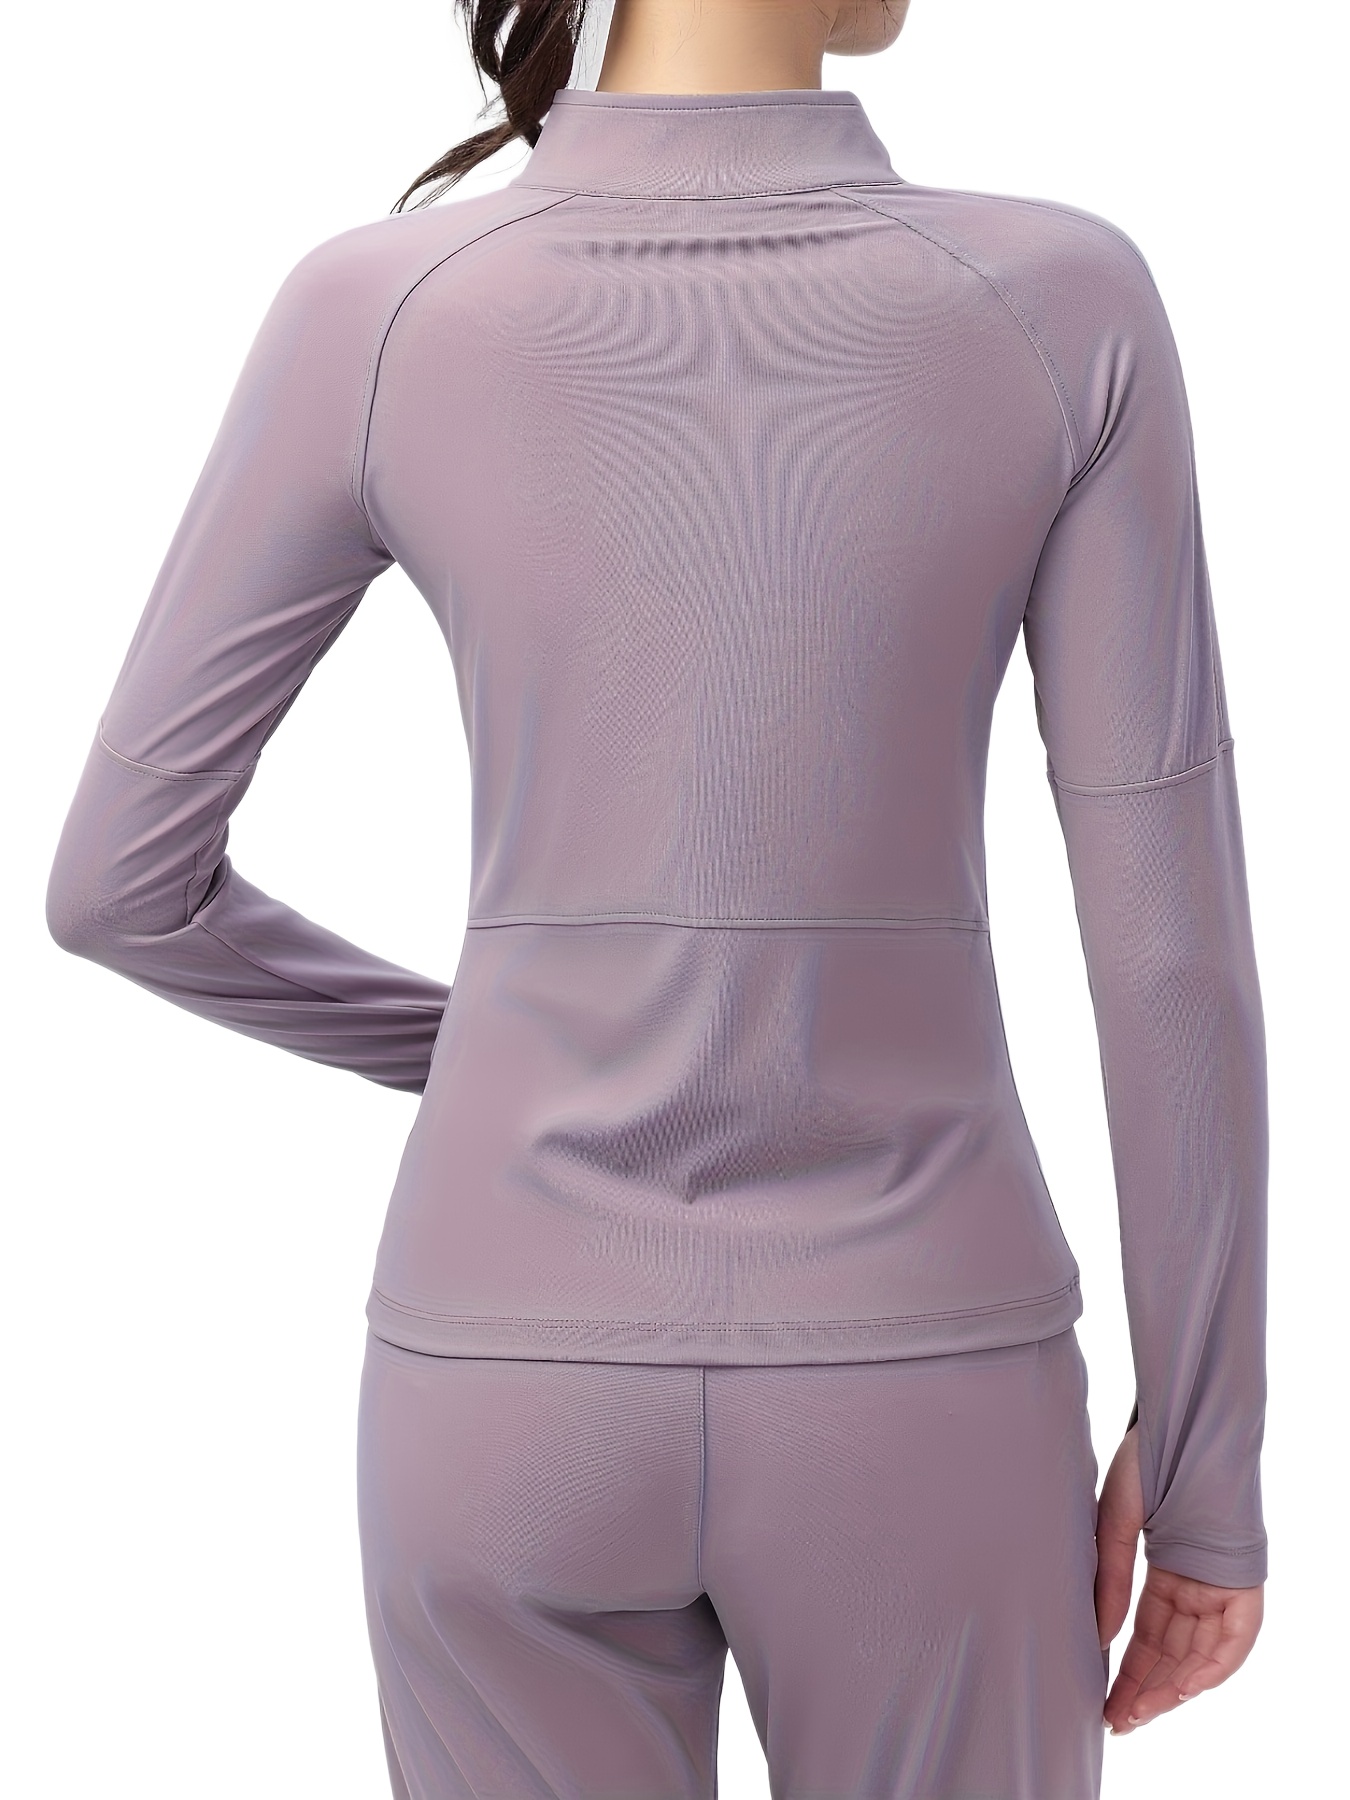 Ptula Womens Long Sleeve Tee Shirt Purple Medium M Thumbholes P’tula  Activewear